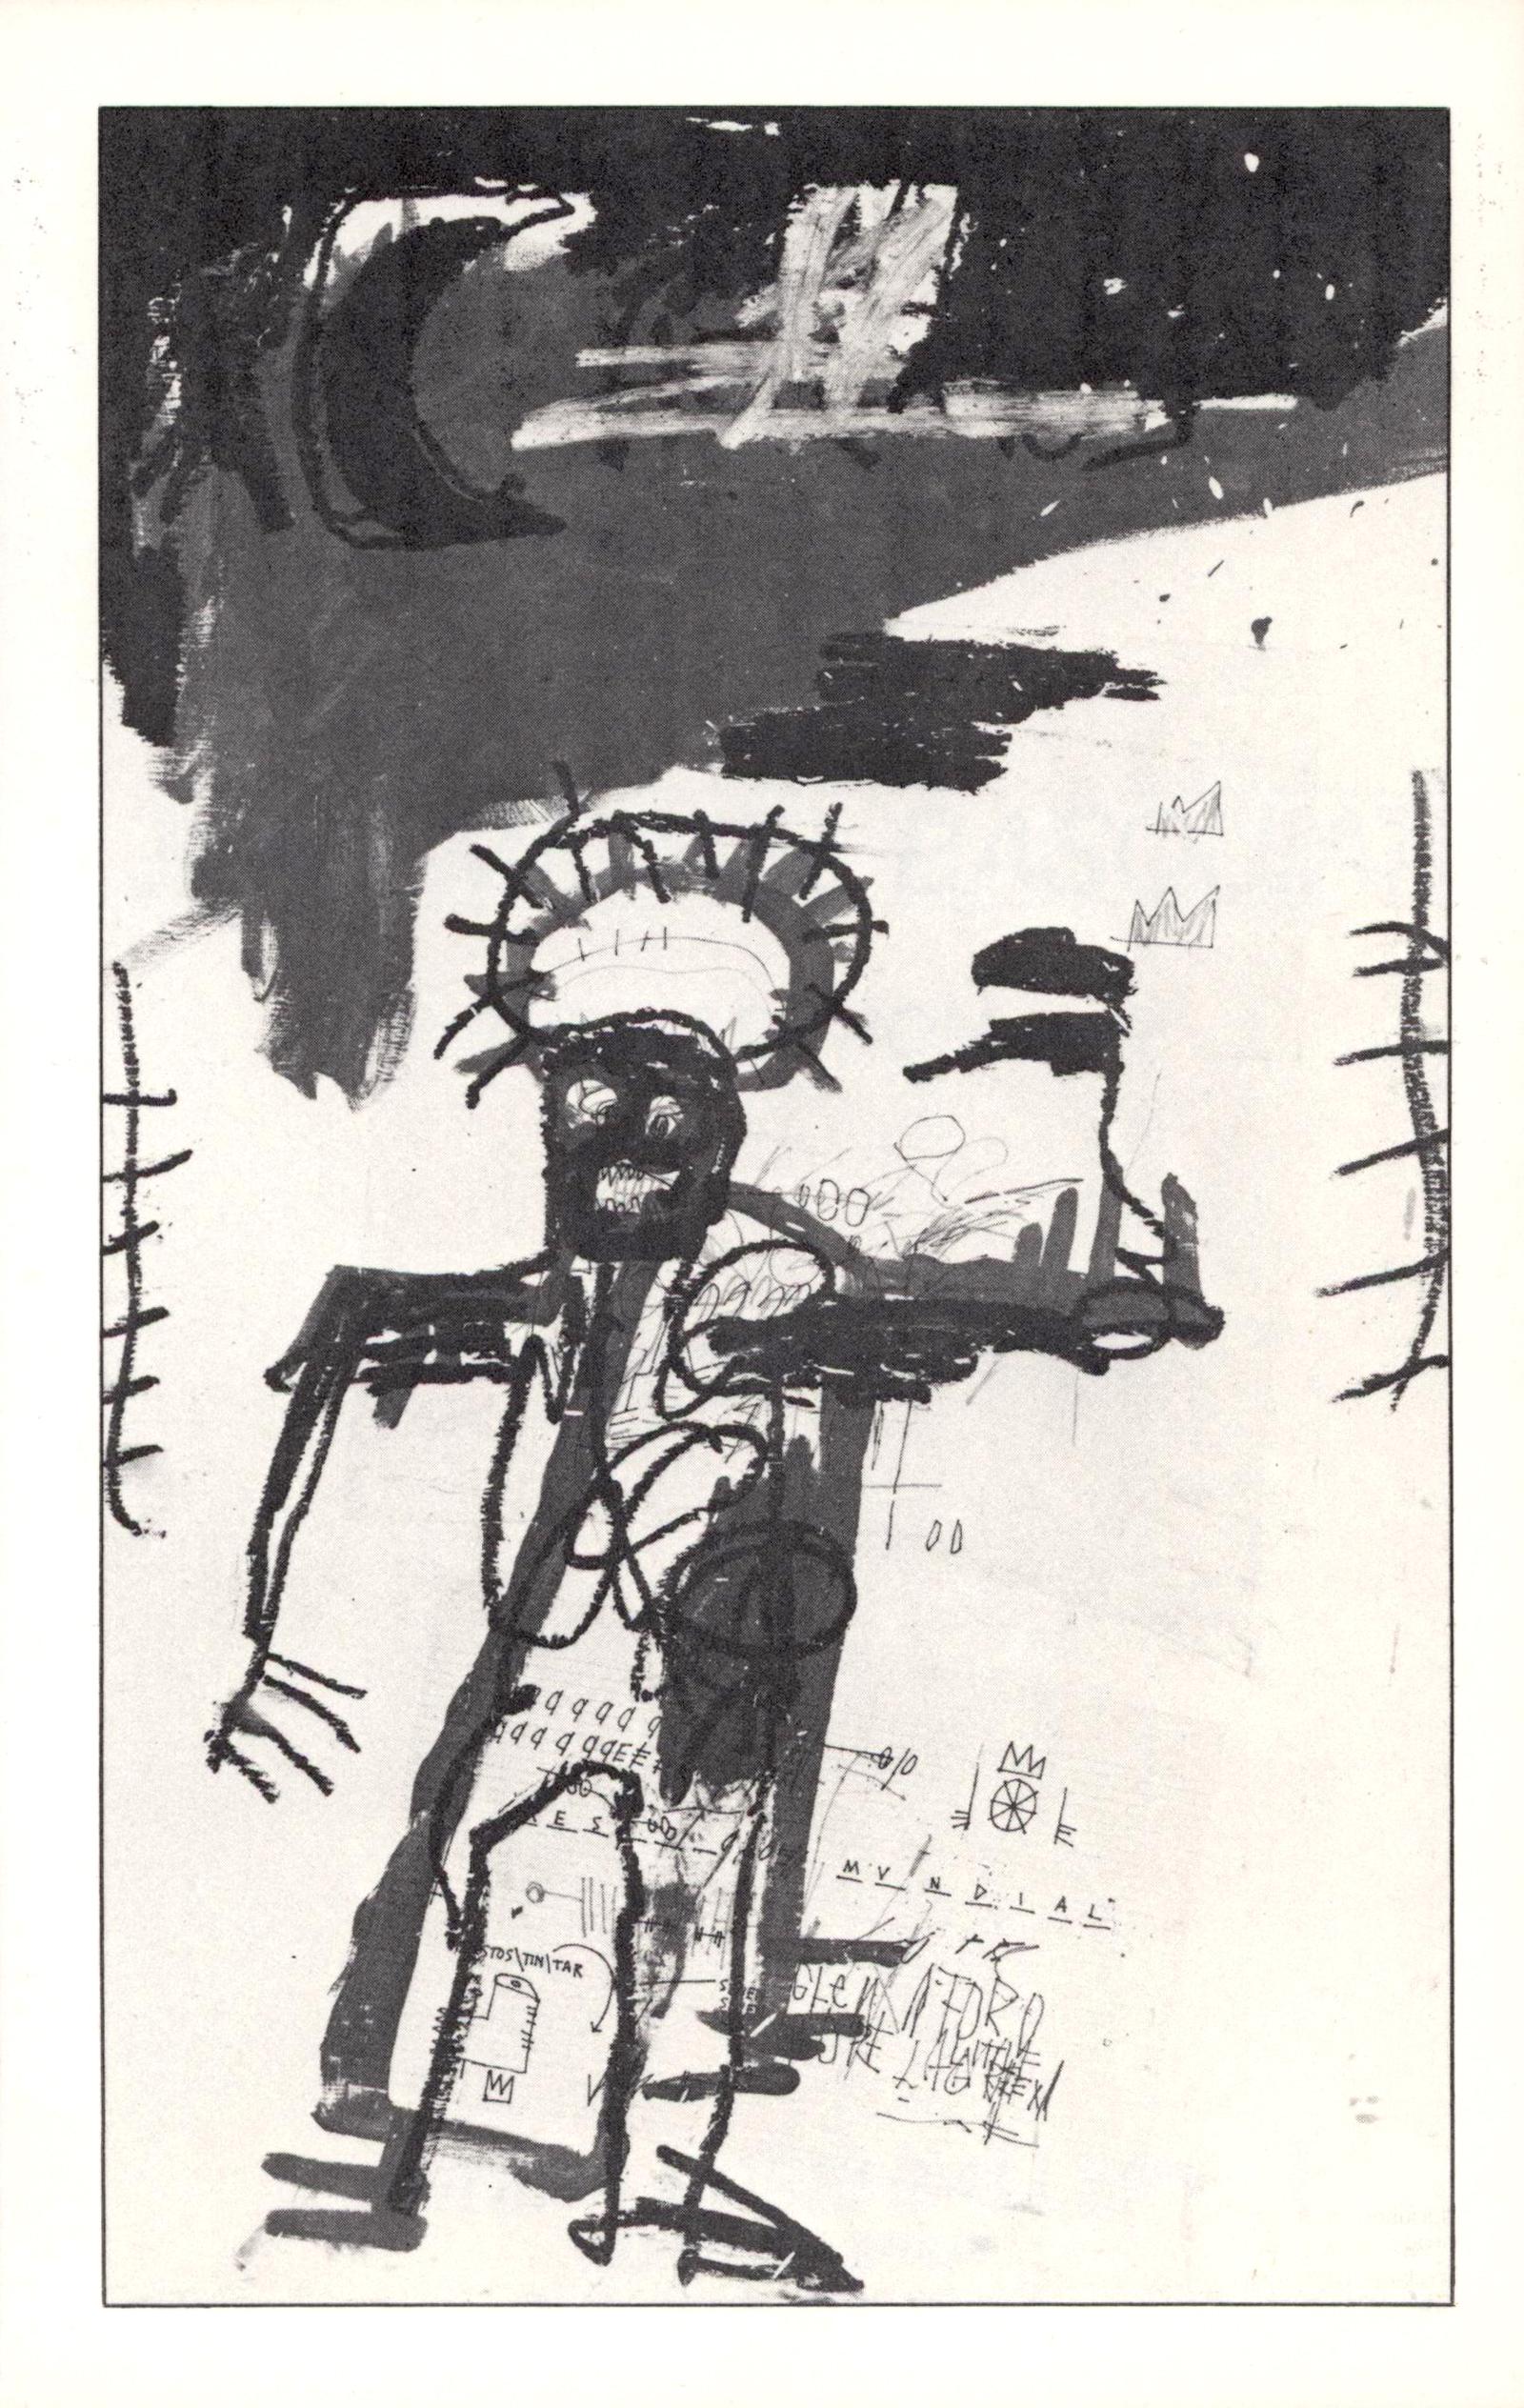 Jean-Michel Basquiat Annina Nosei Gallery NY 1982-1988 (Basquiat Annina Nosei) - Print by (after) Jean-Michel Basquiat